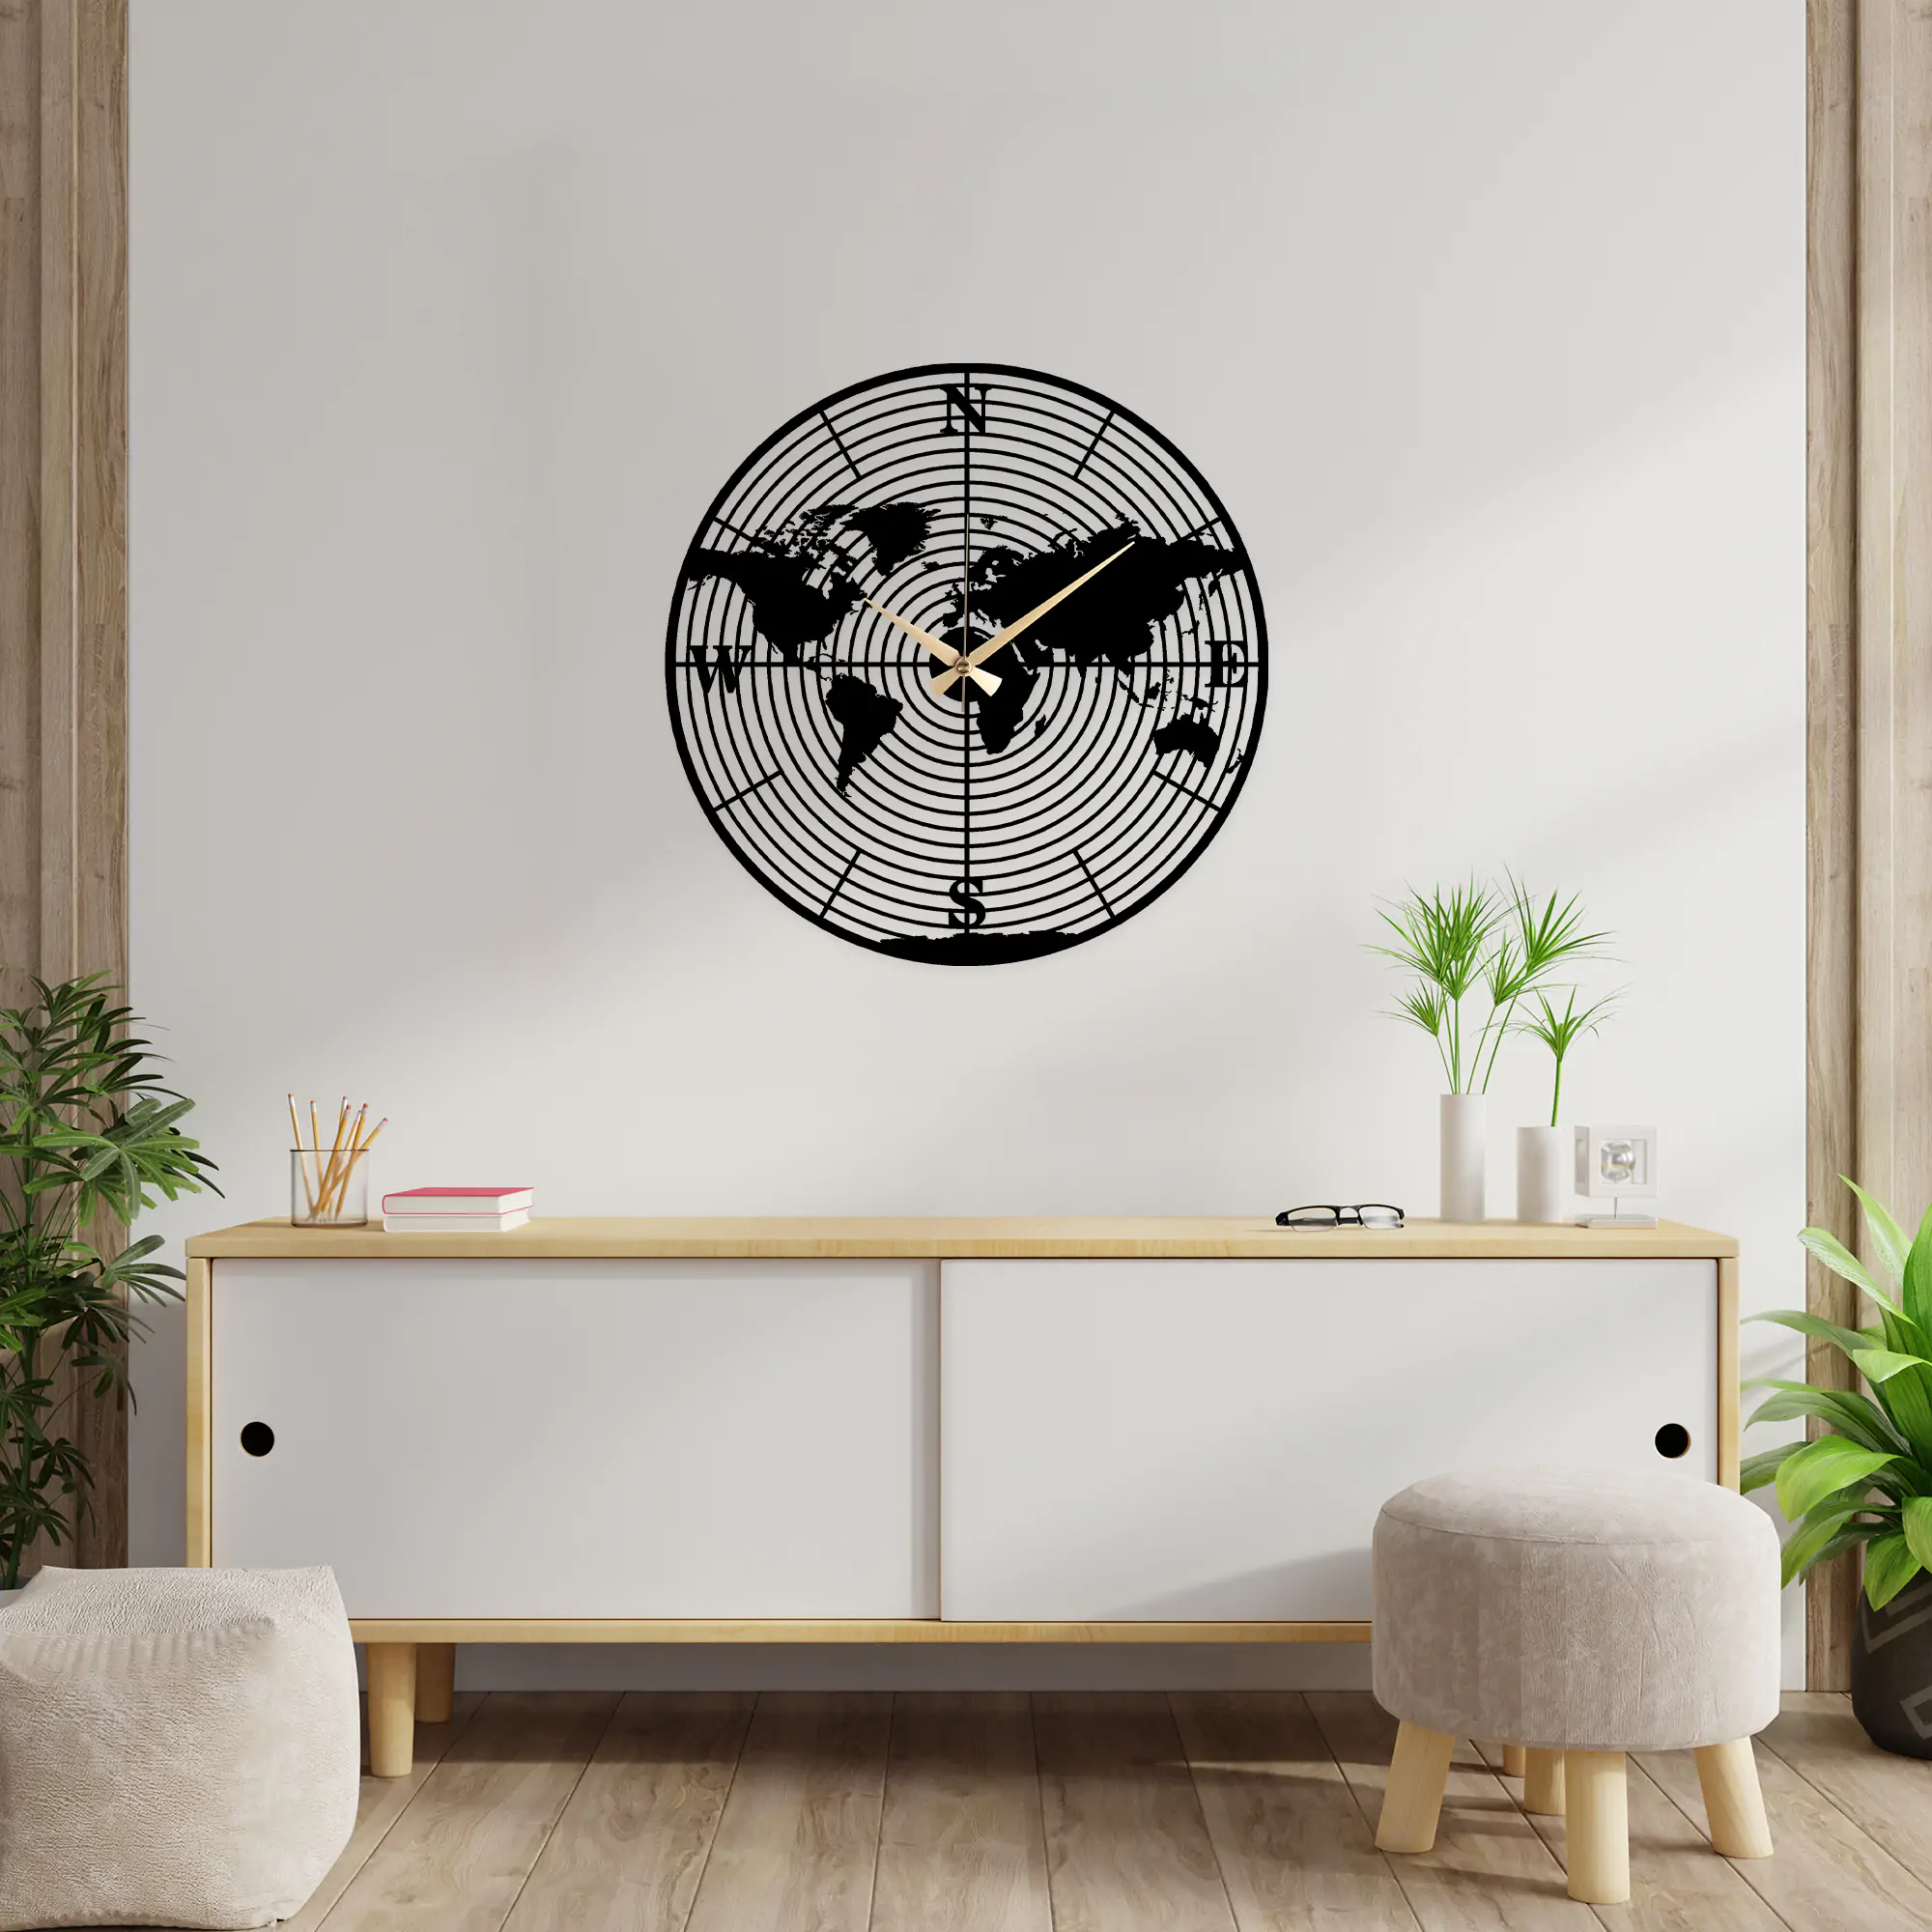 Ekvatoral Metal Wall Clock